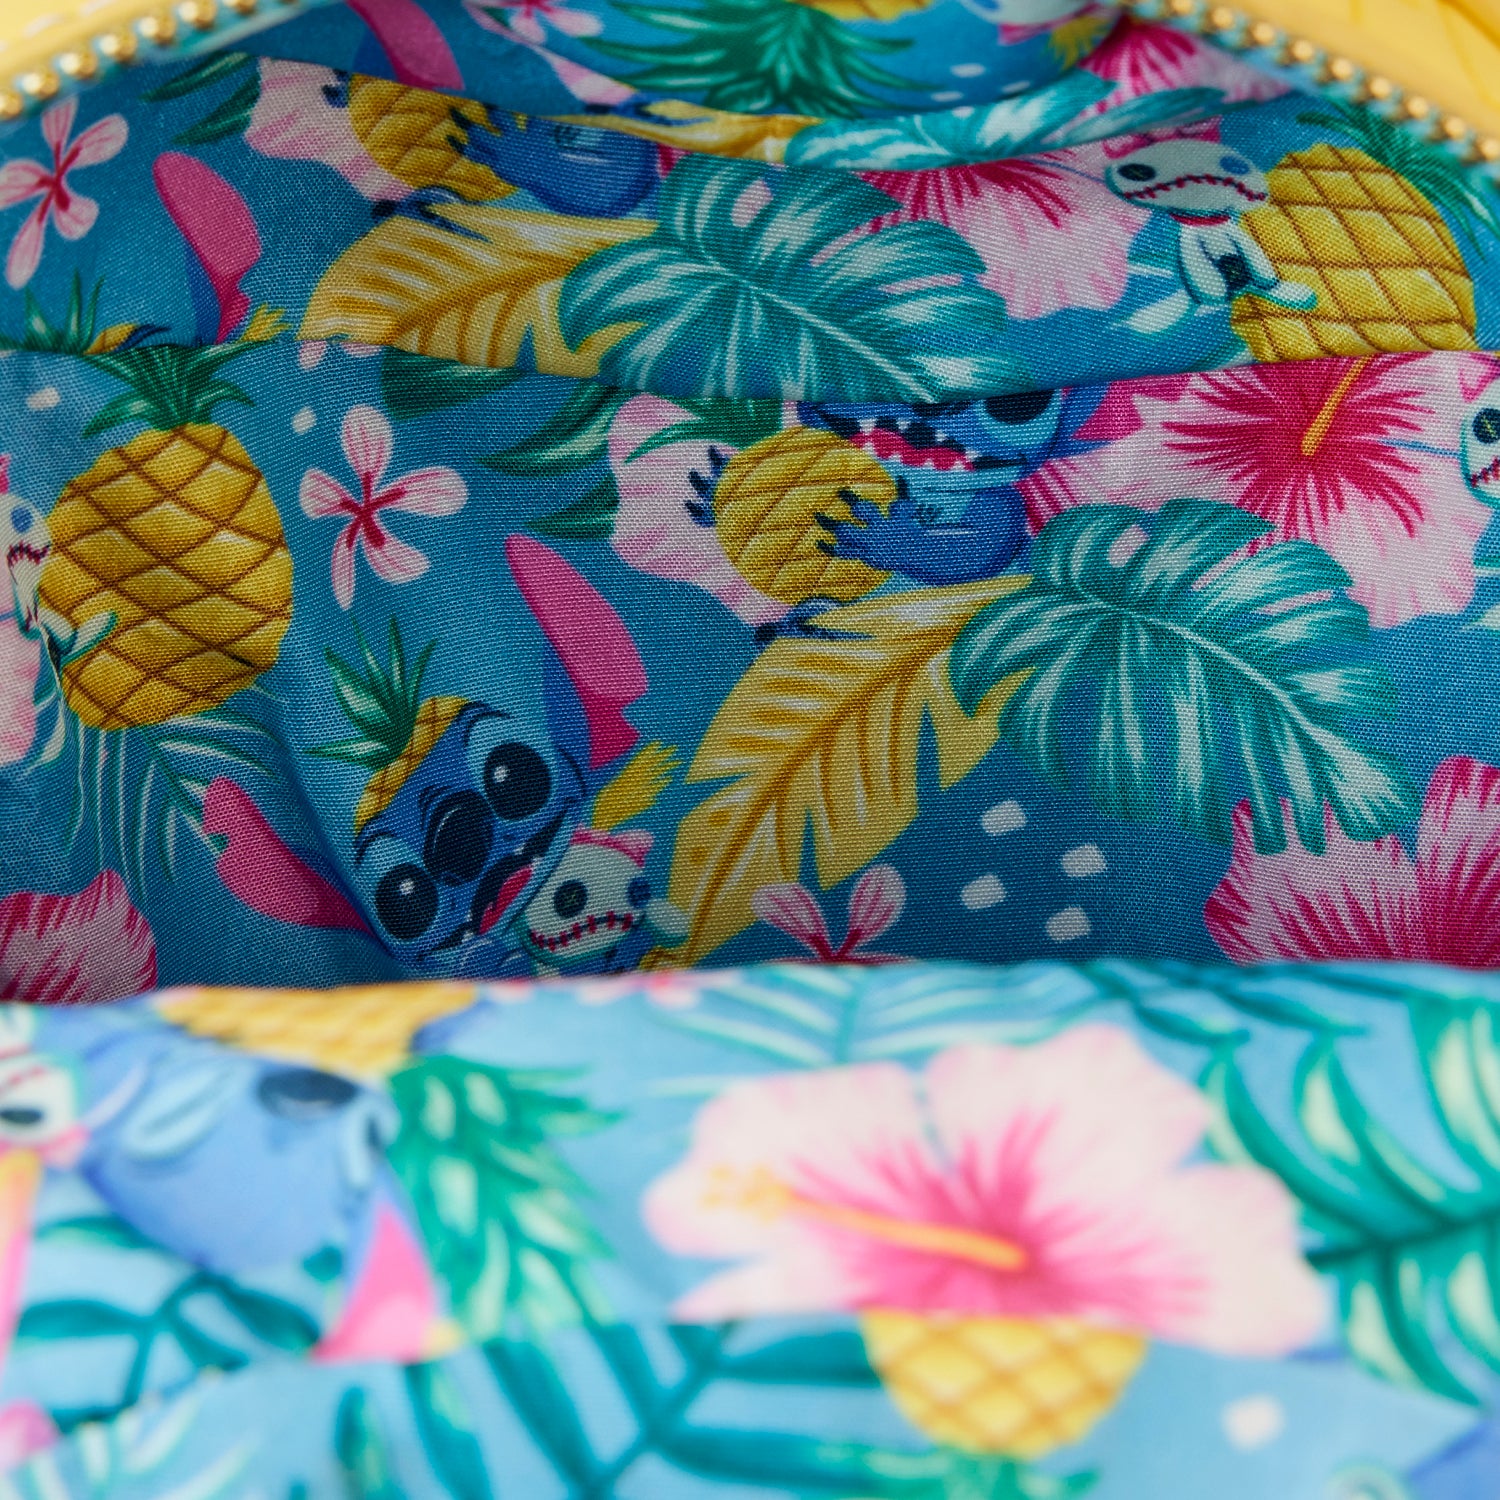 Disney Lilo & Stitch Tropical Crossbody Bag